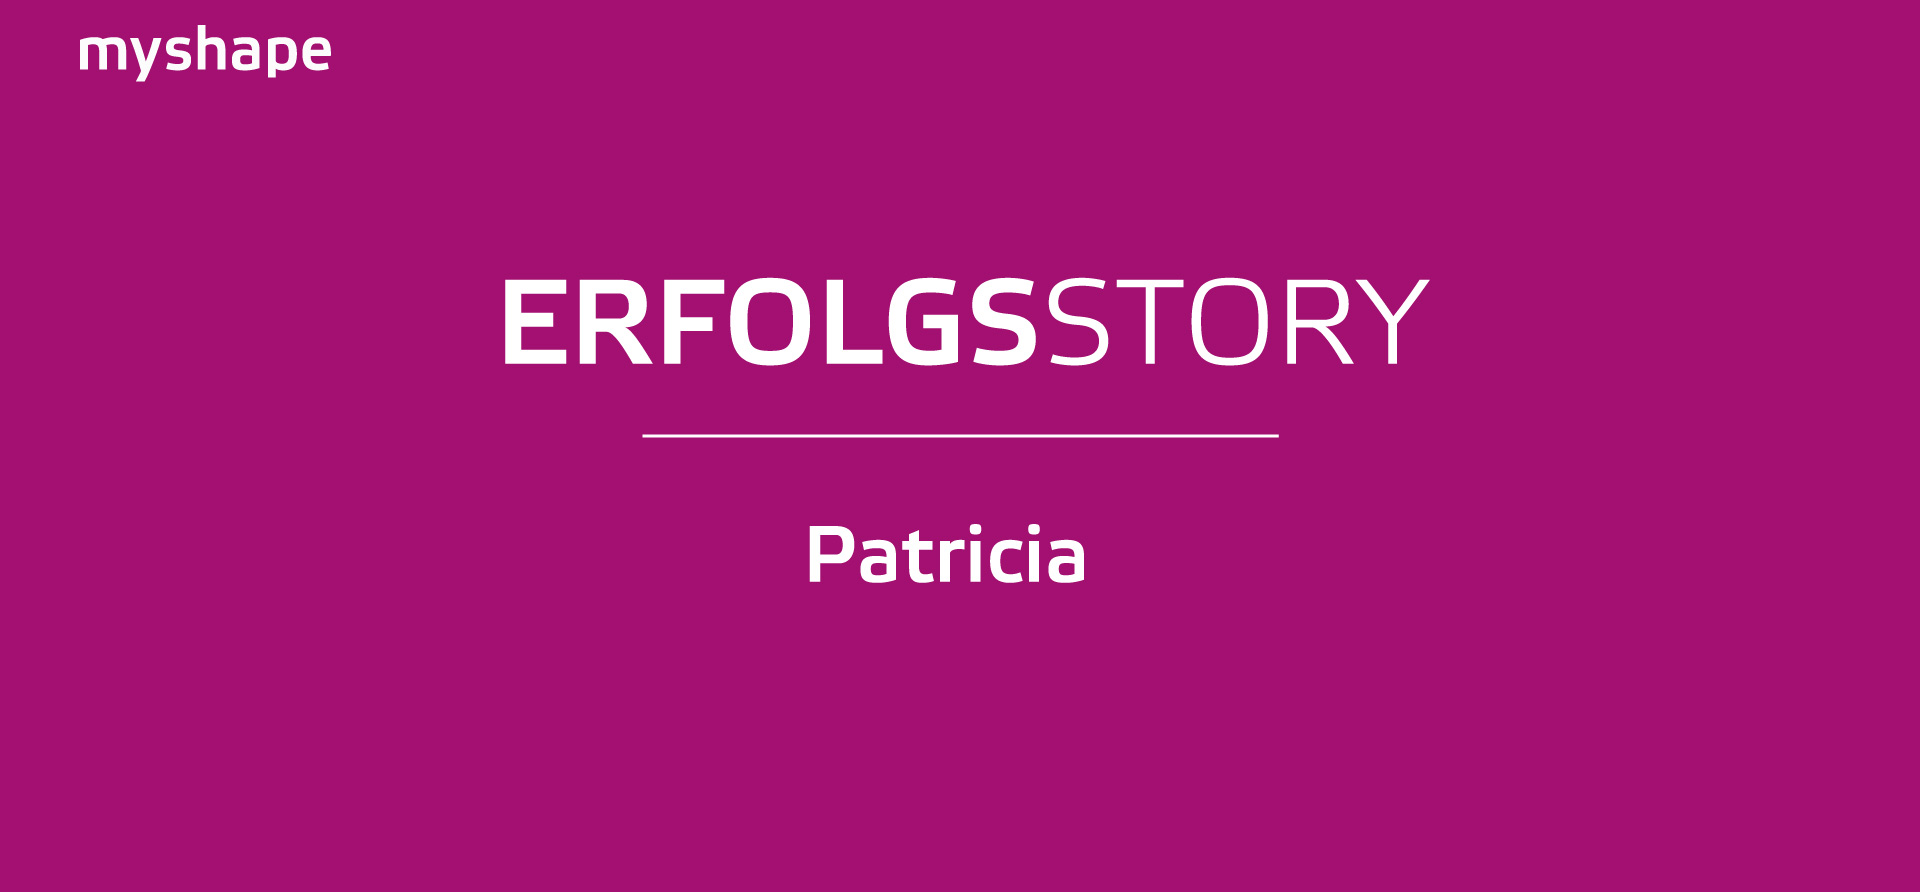 Patricias Erfolgsstory